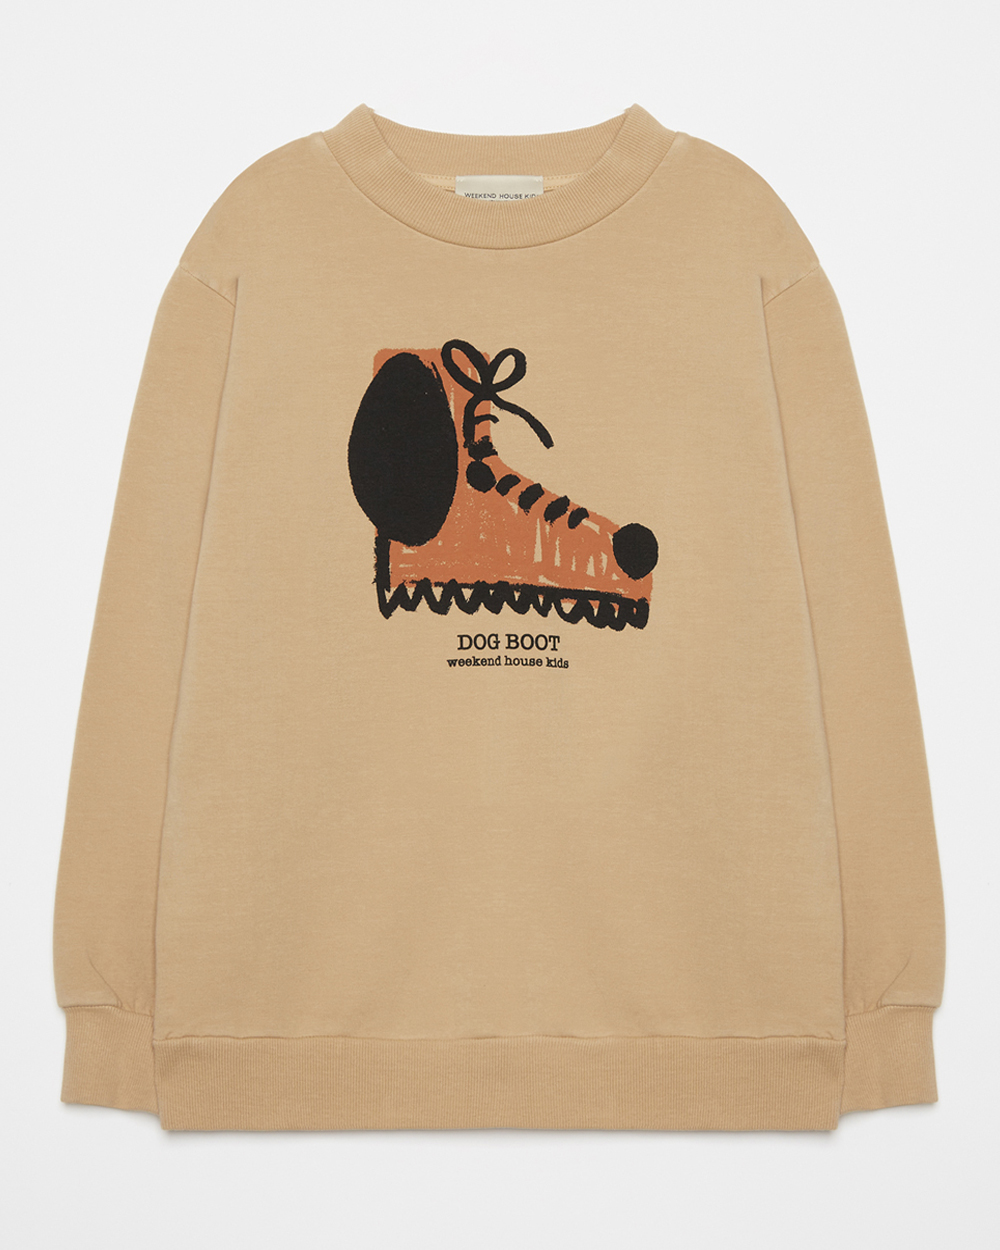 [WEEKEND HOUSE KIDS]Dog boots sweatshirt /Dog boots sweatshirt [4Y,6Y,8Y,10Y,12Y]